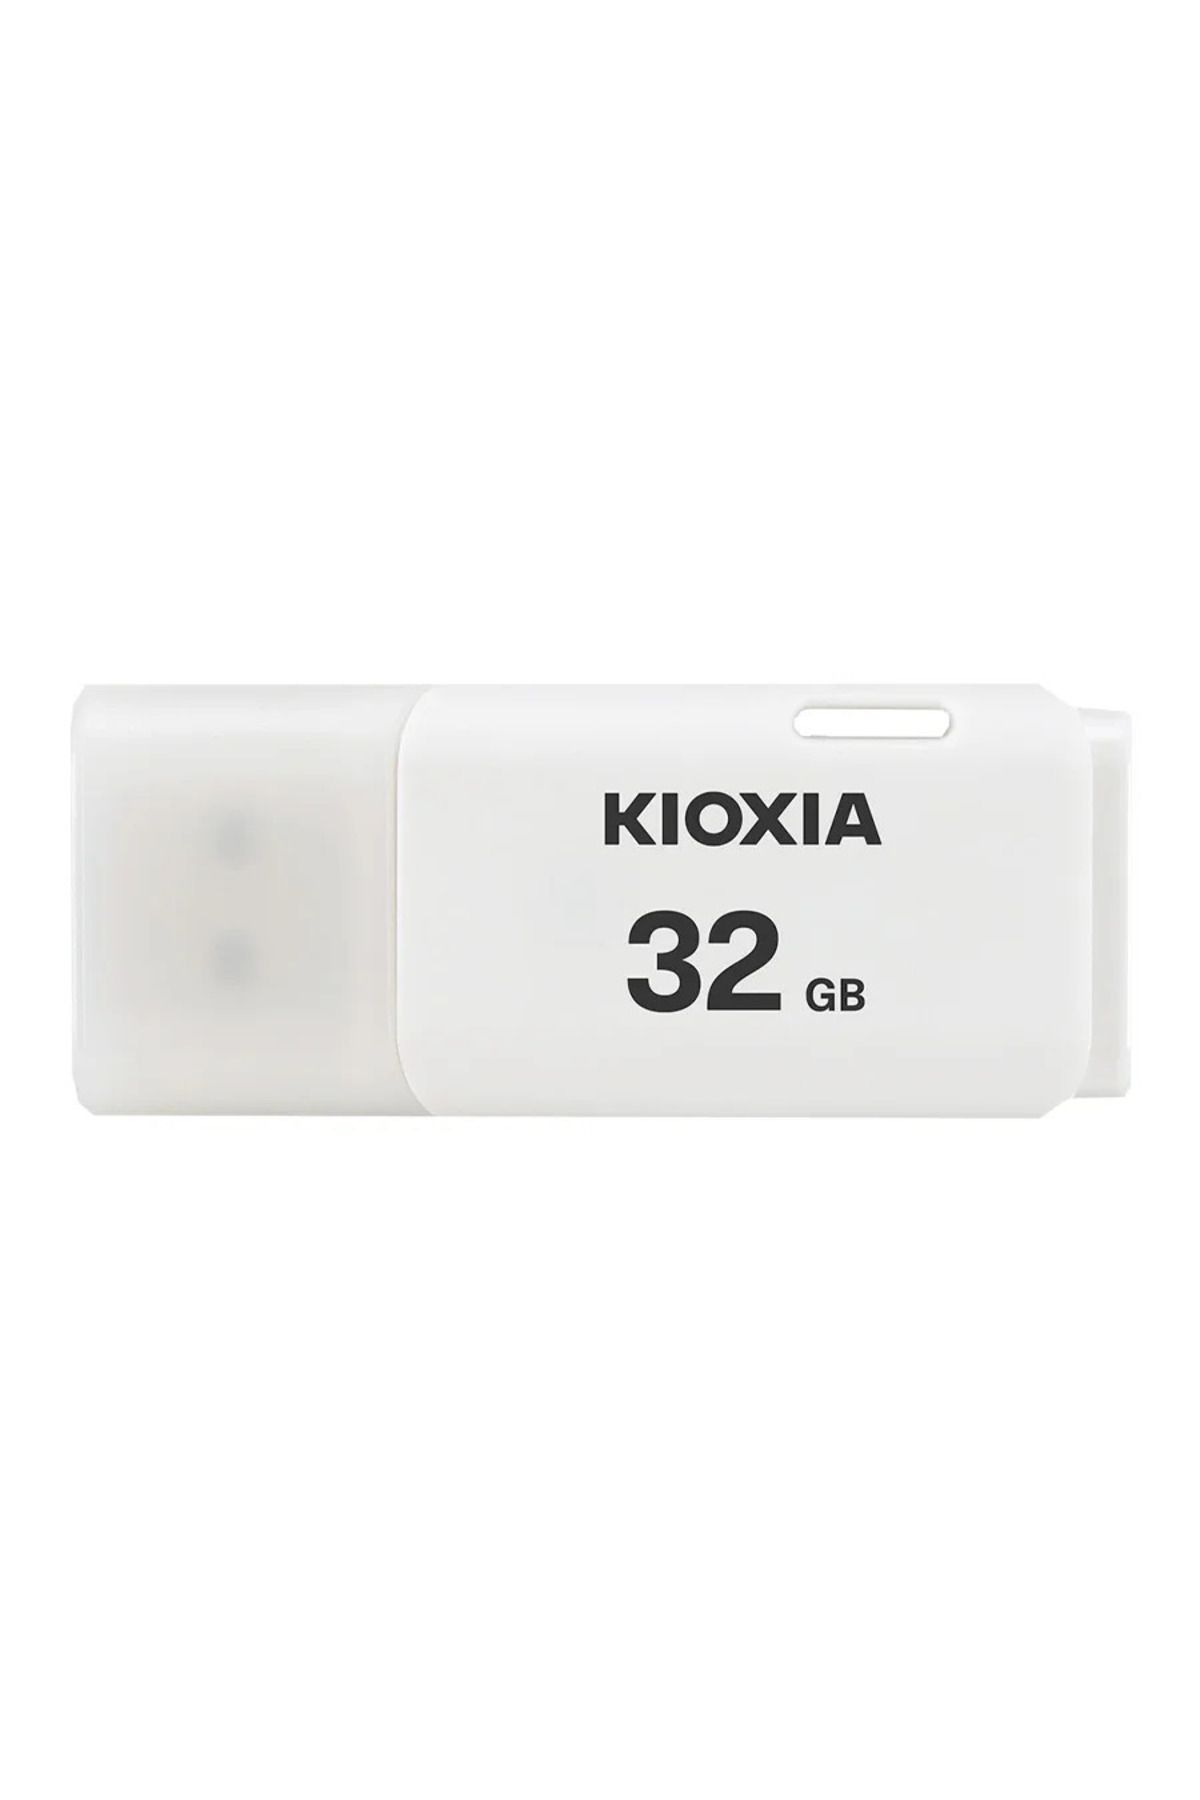 Kioxia 32gb U202 Beyaz Usb 2.0 Bellek